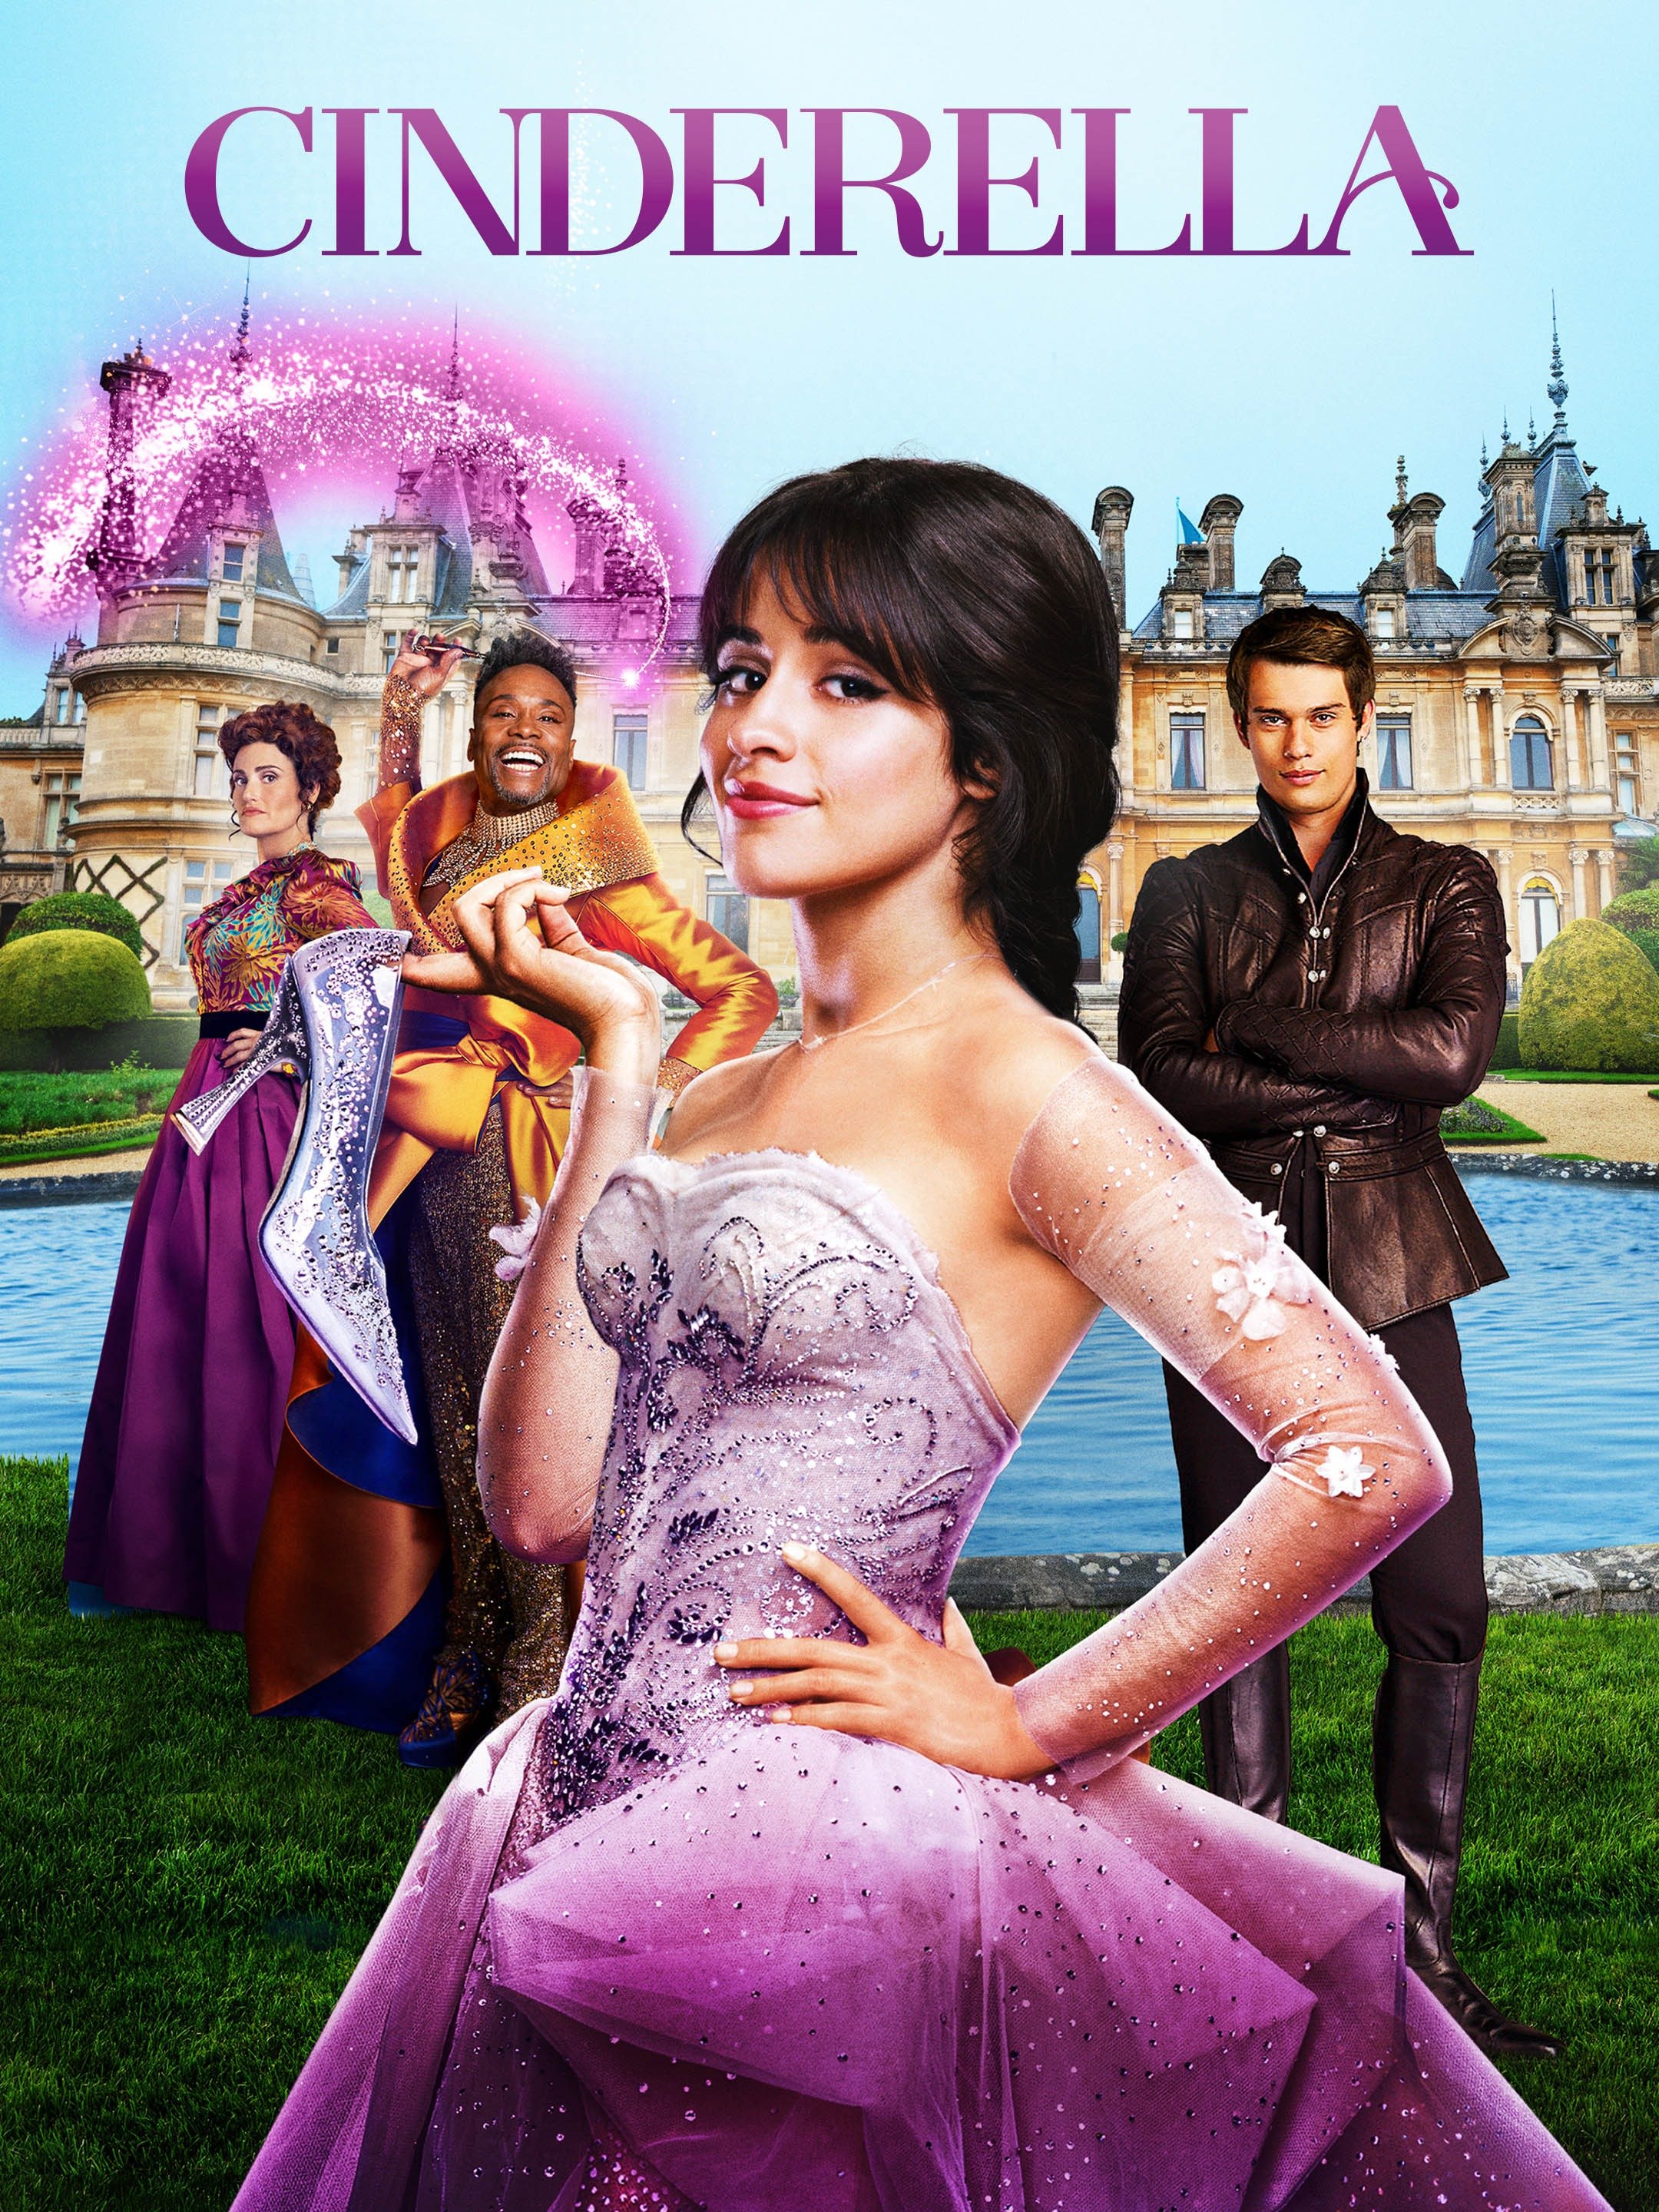 Cinderella TV Spot Trailers & Videos Rotten Tomatoes